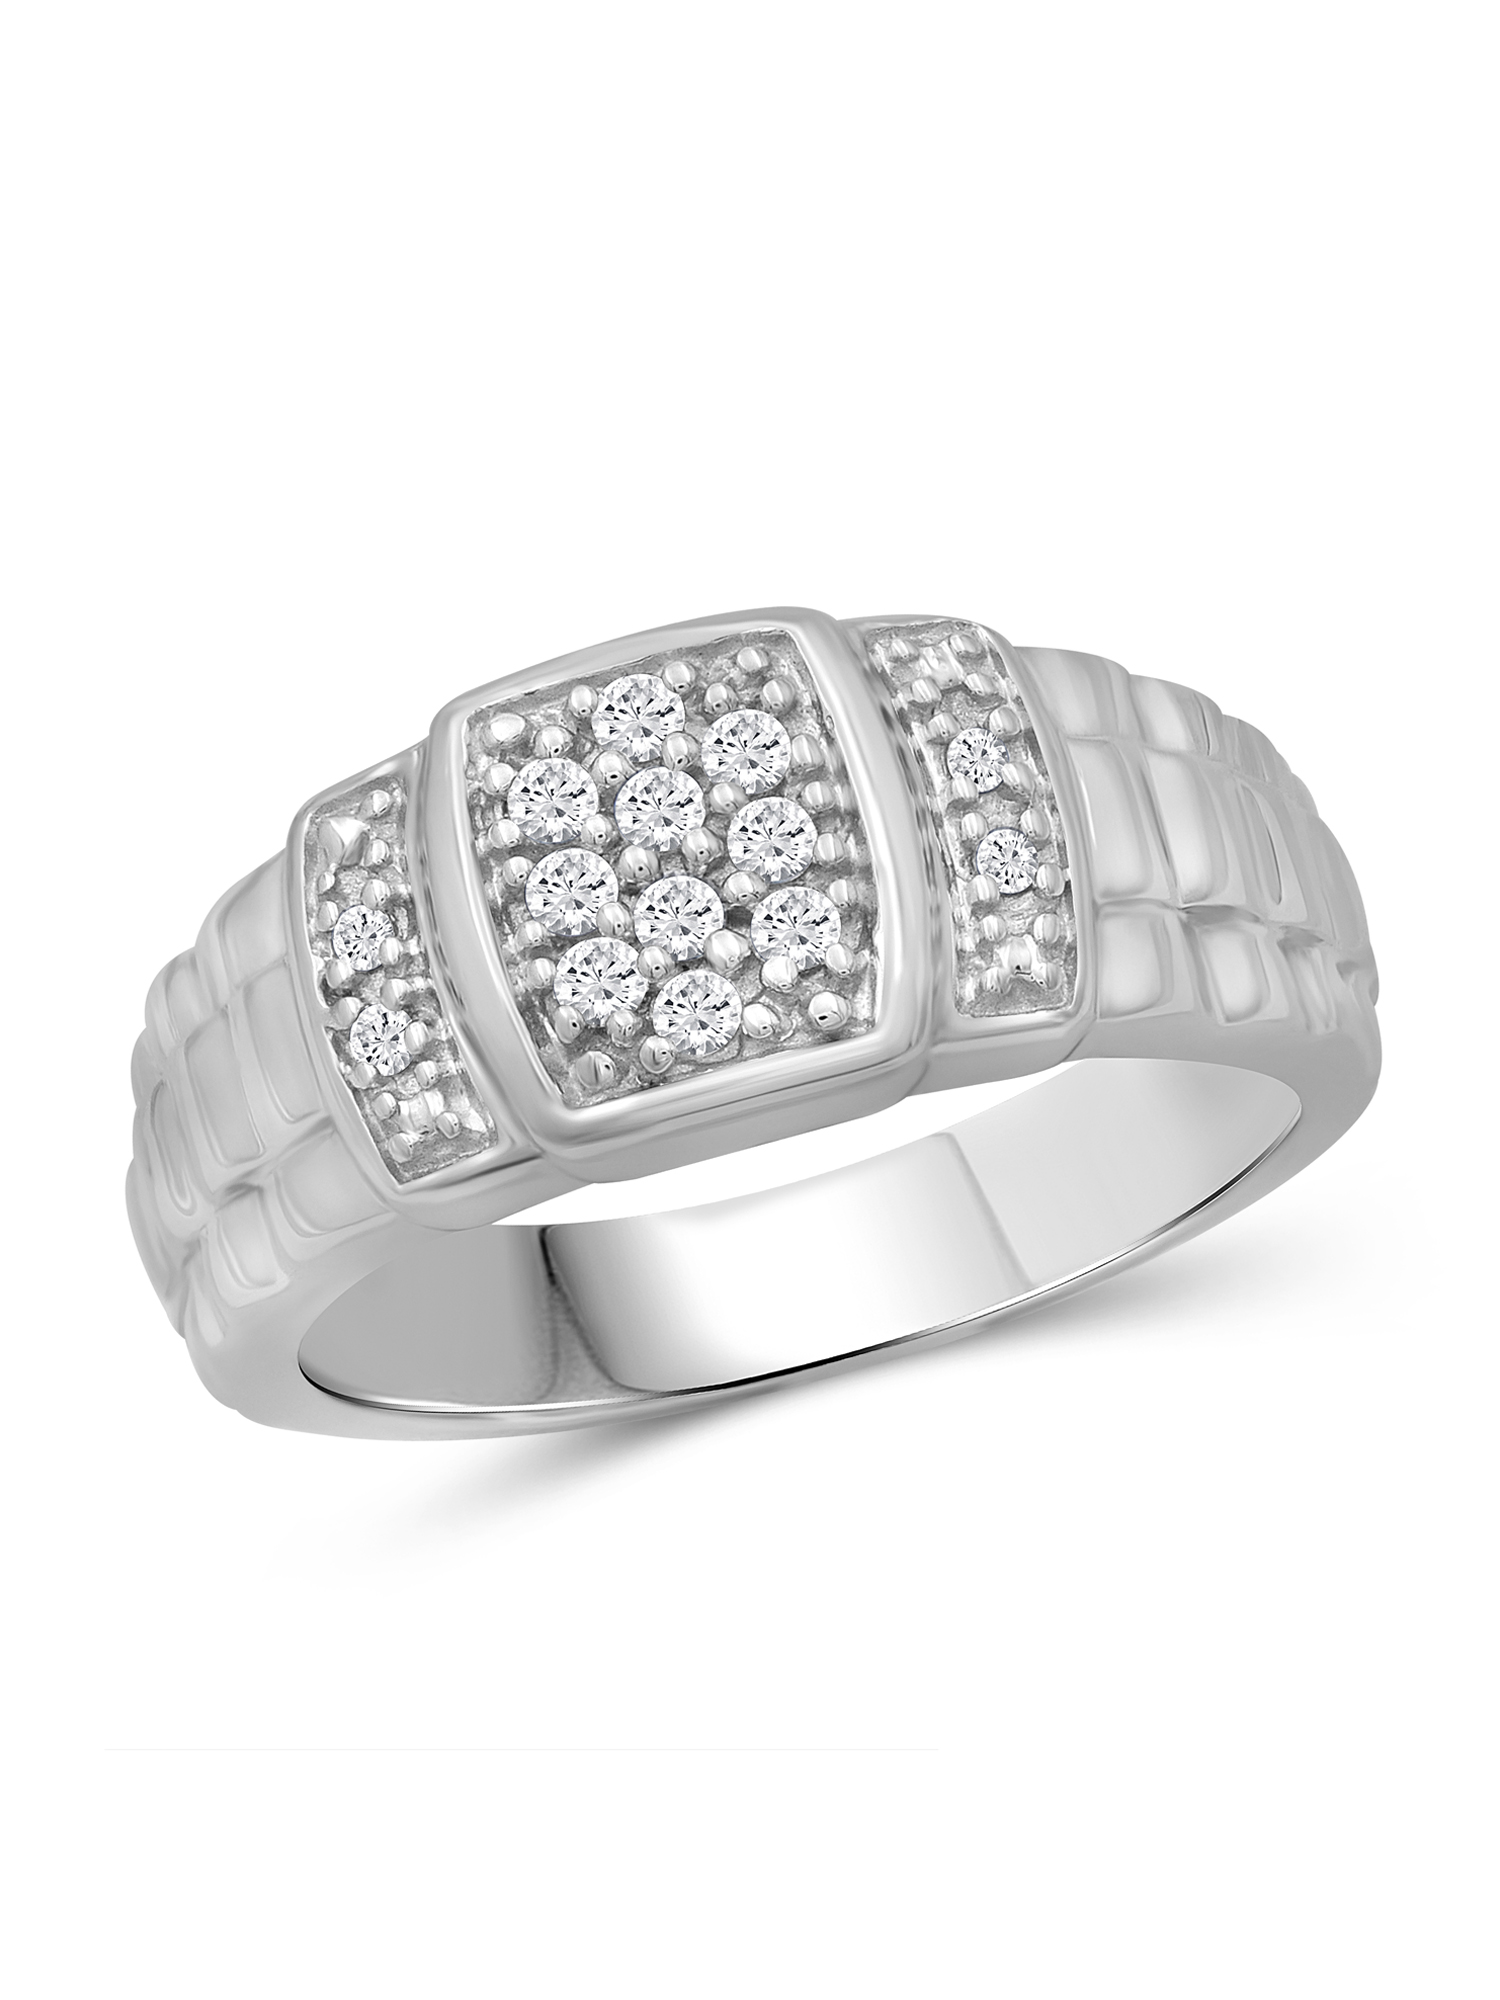 JewelersClub - 1/4 Carat T.W. White Diamond 10k White Gold Men's Ring ...